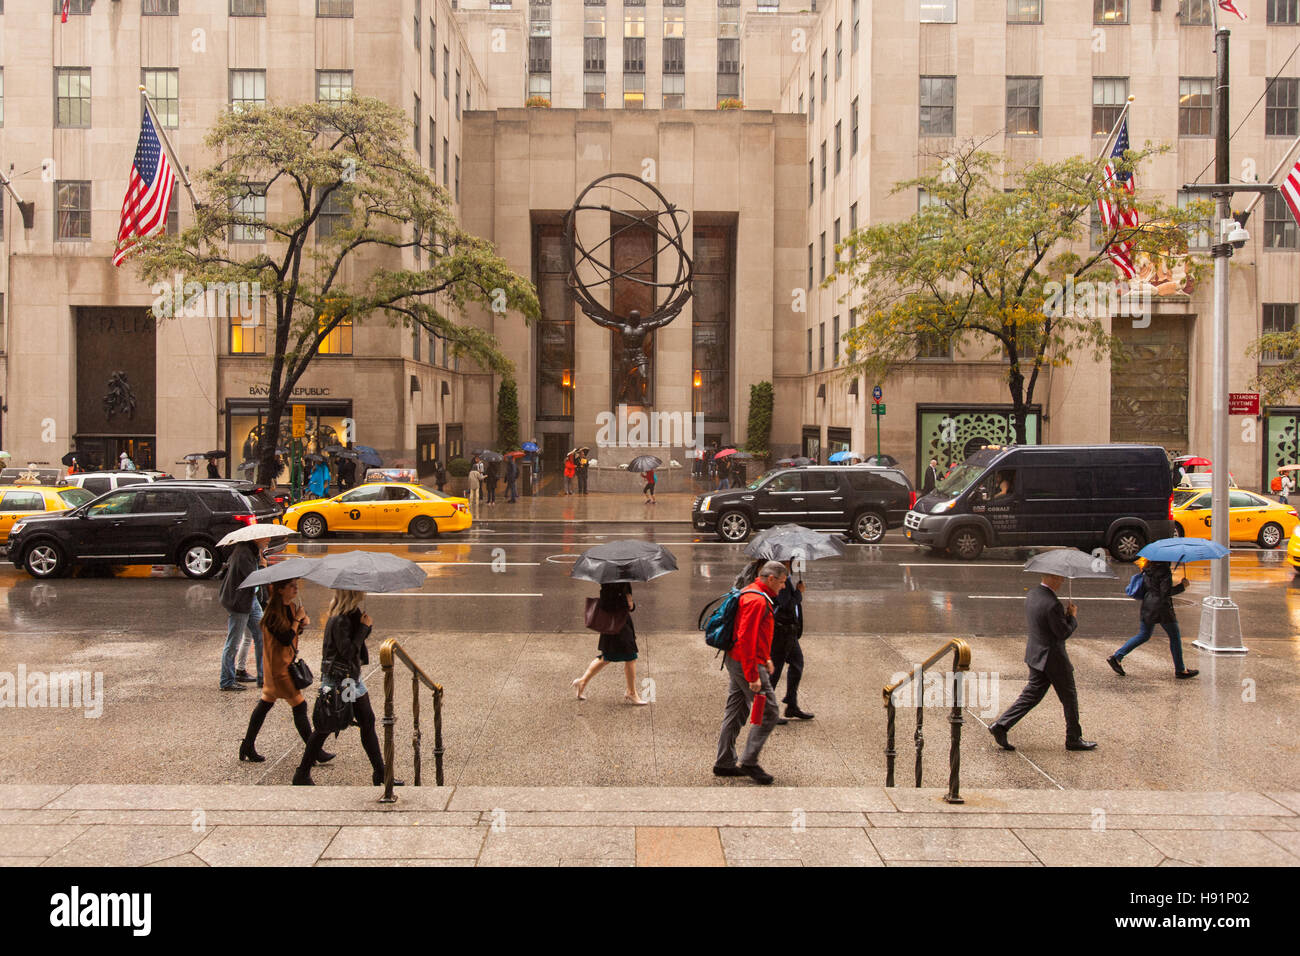 Rockefeller Center Statue of Atlas, Fifth Avenue, Manhattan, New York City, United States of America. Stock Photo